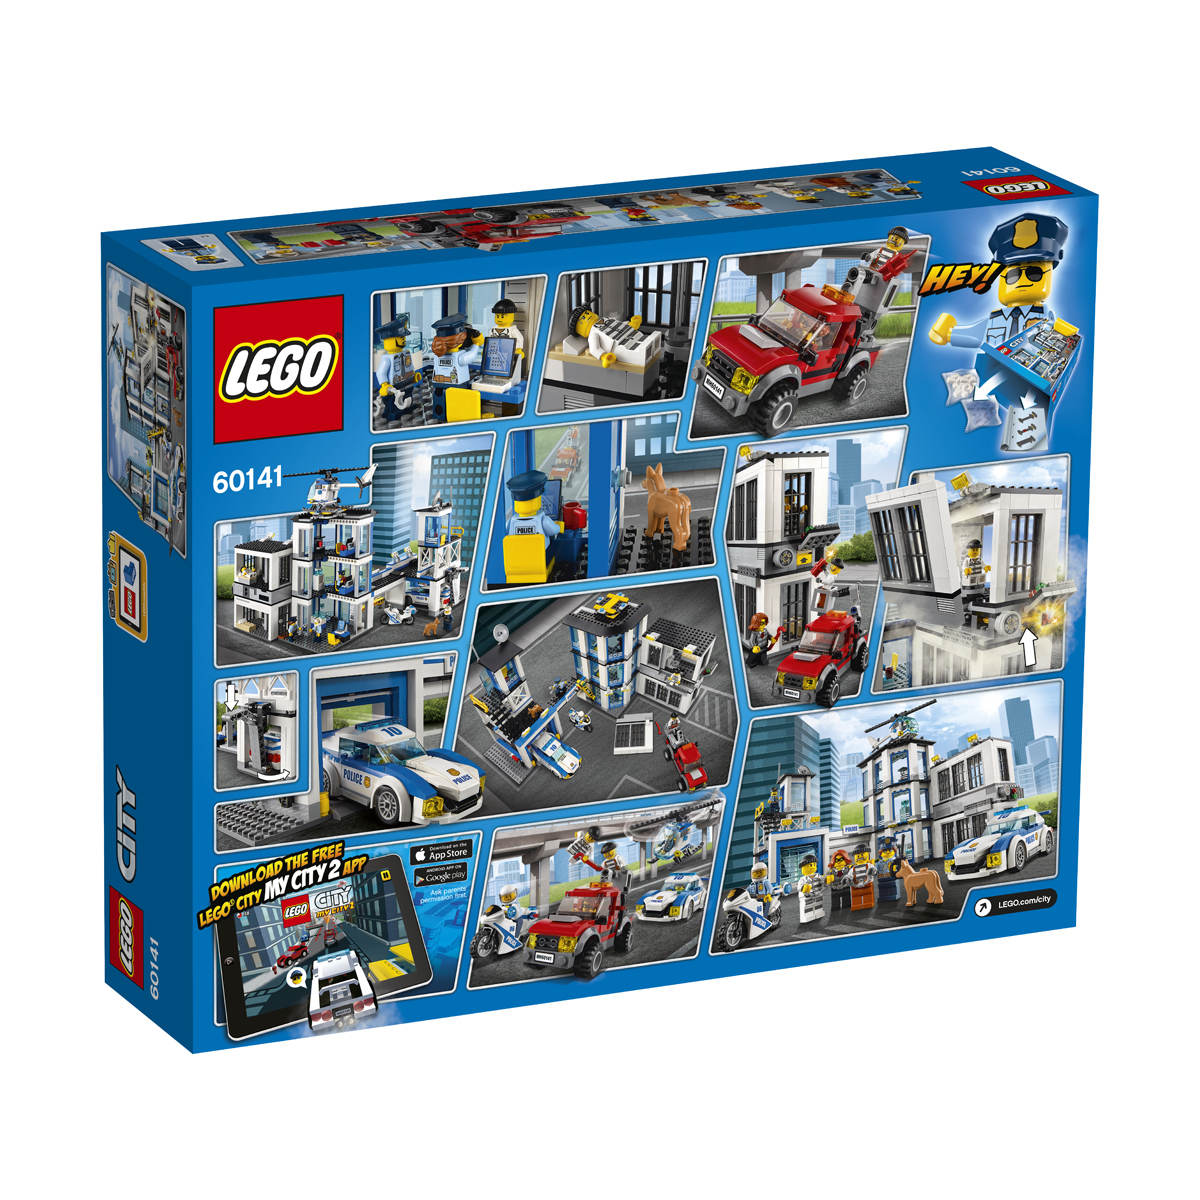 LEGO City Police Station - 60141 | Kmart